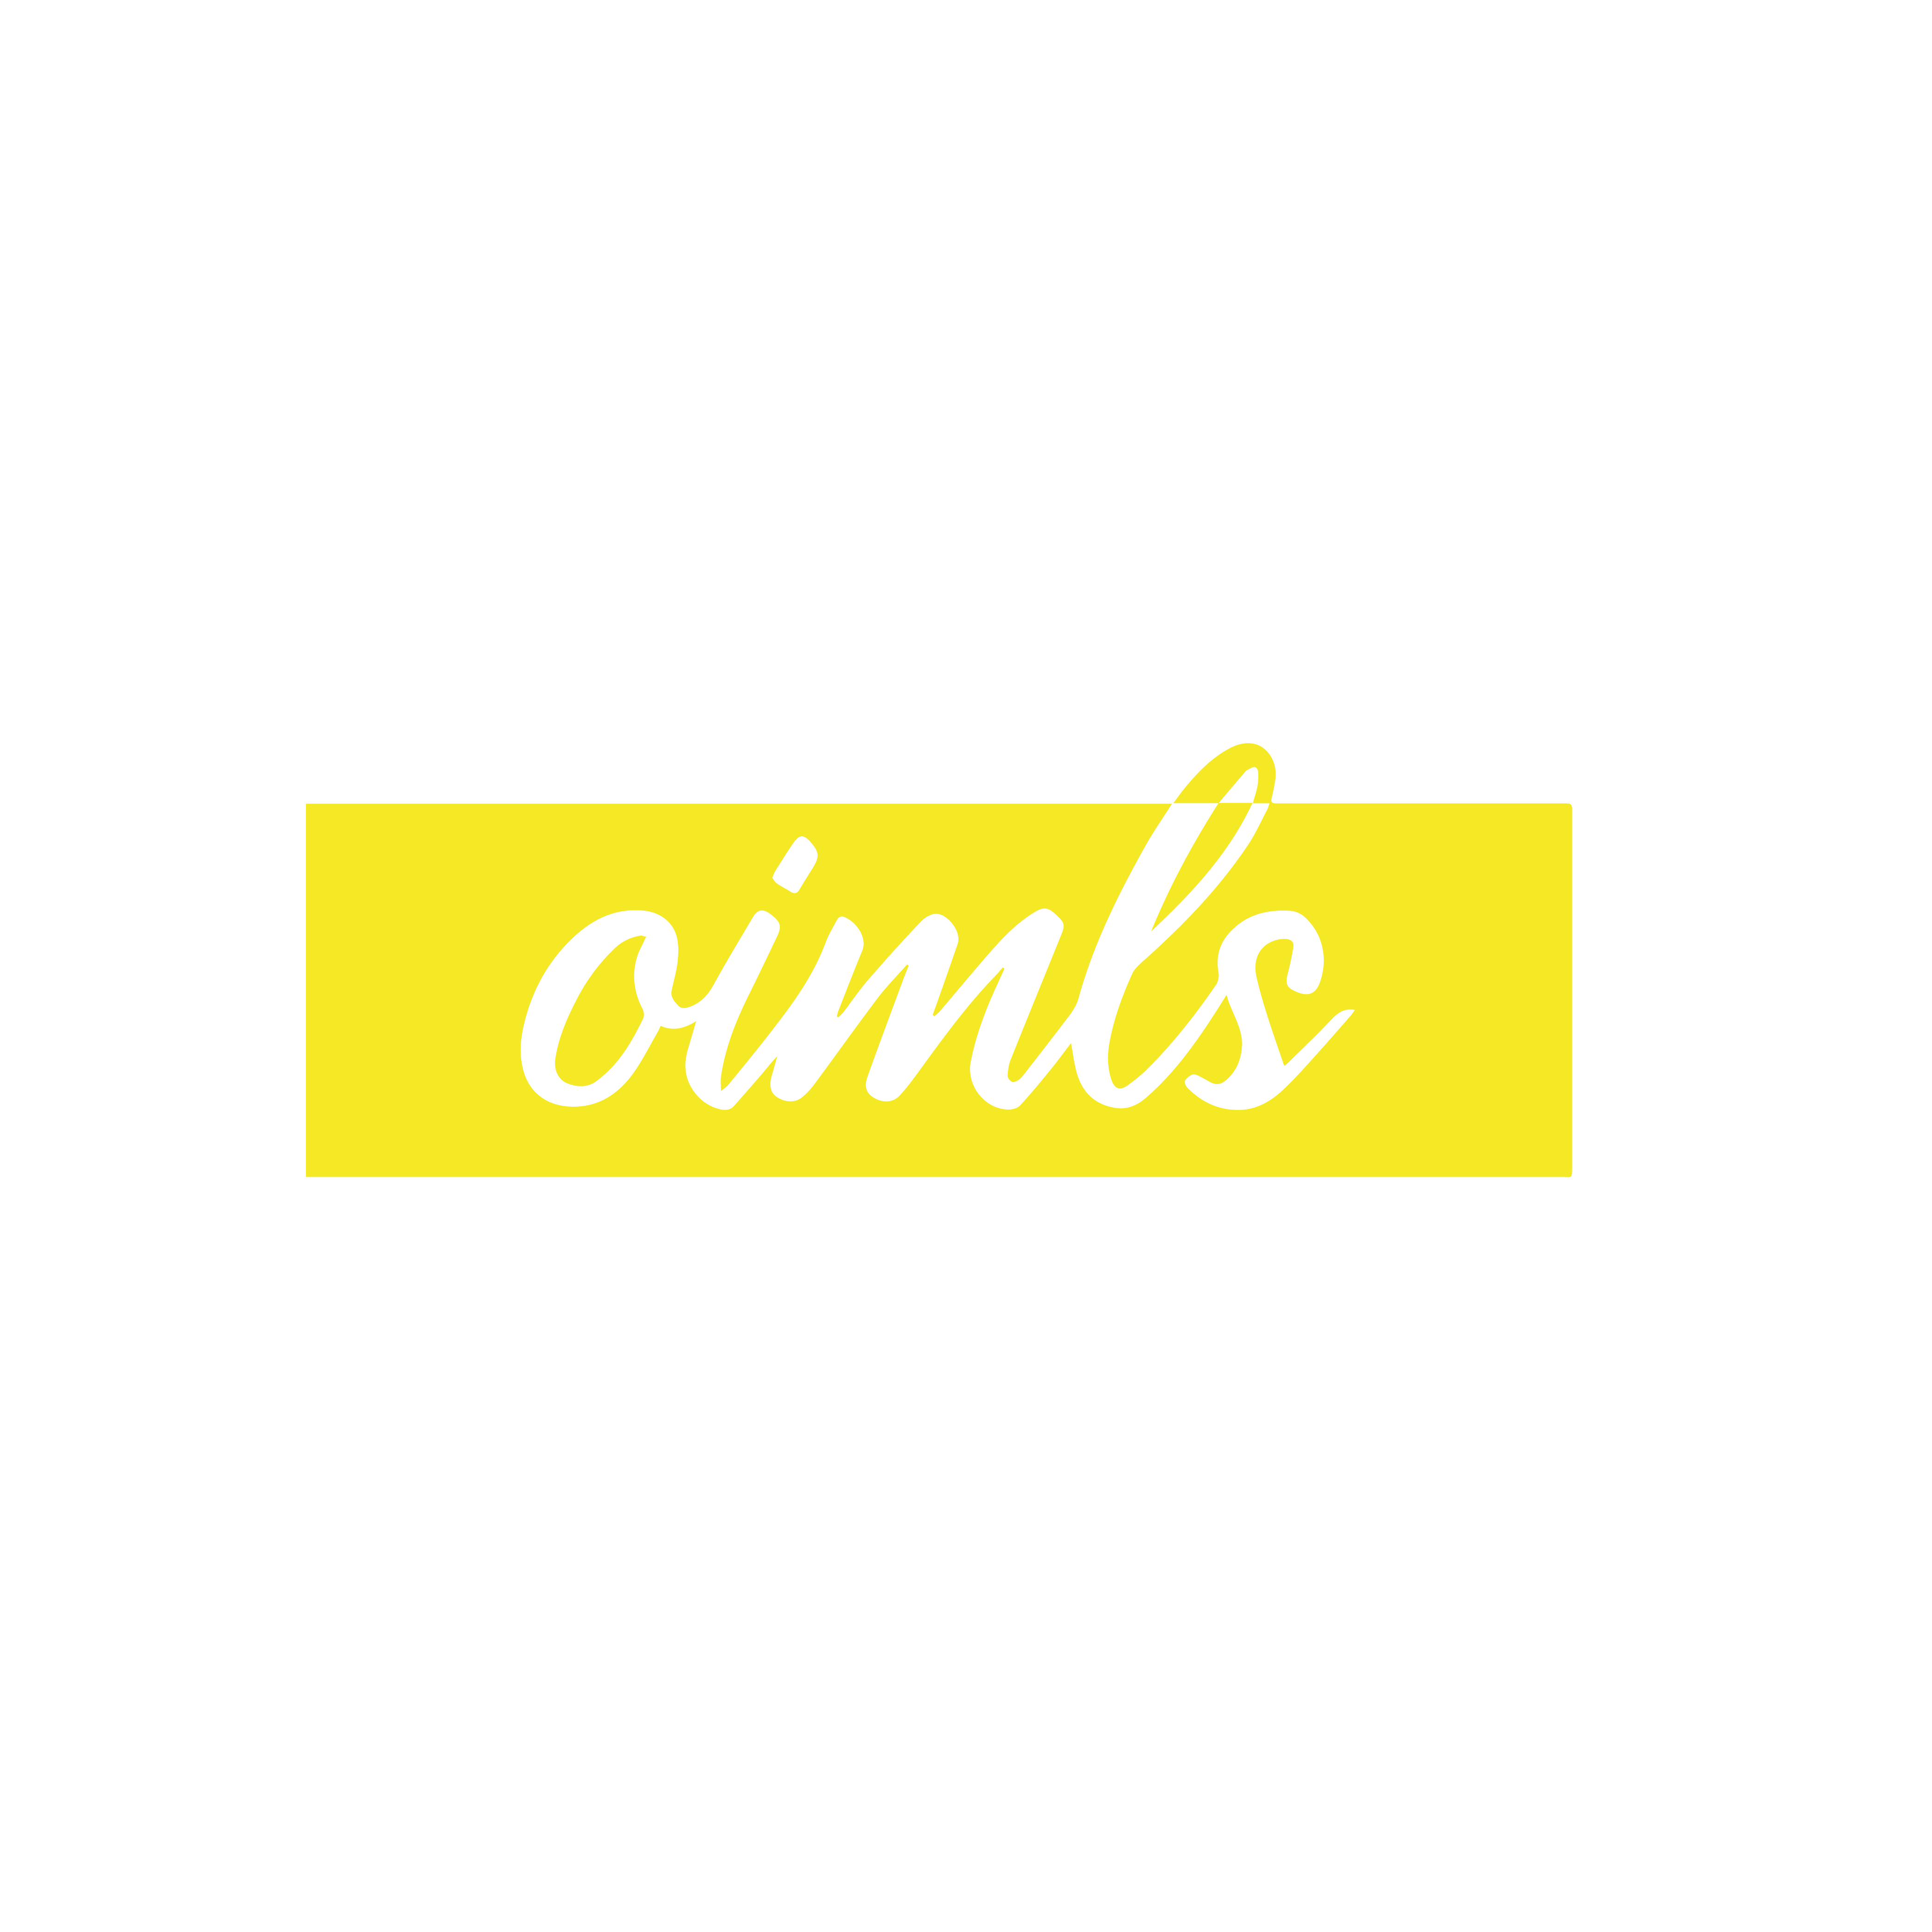 oimls - boxlogo sticker